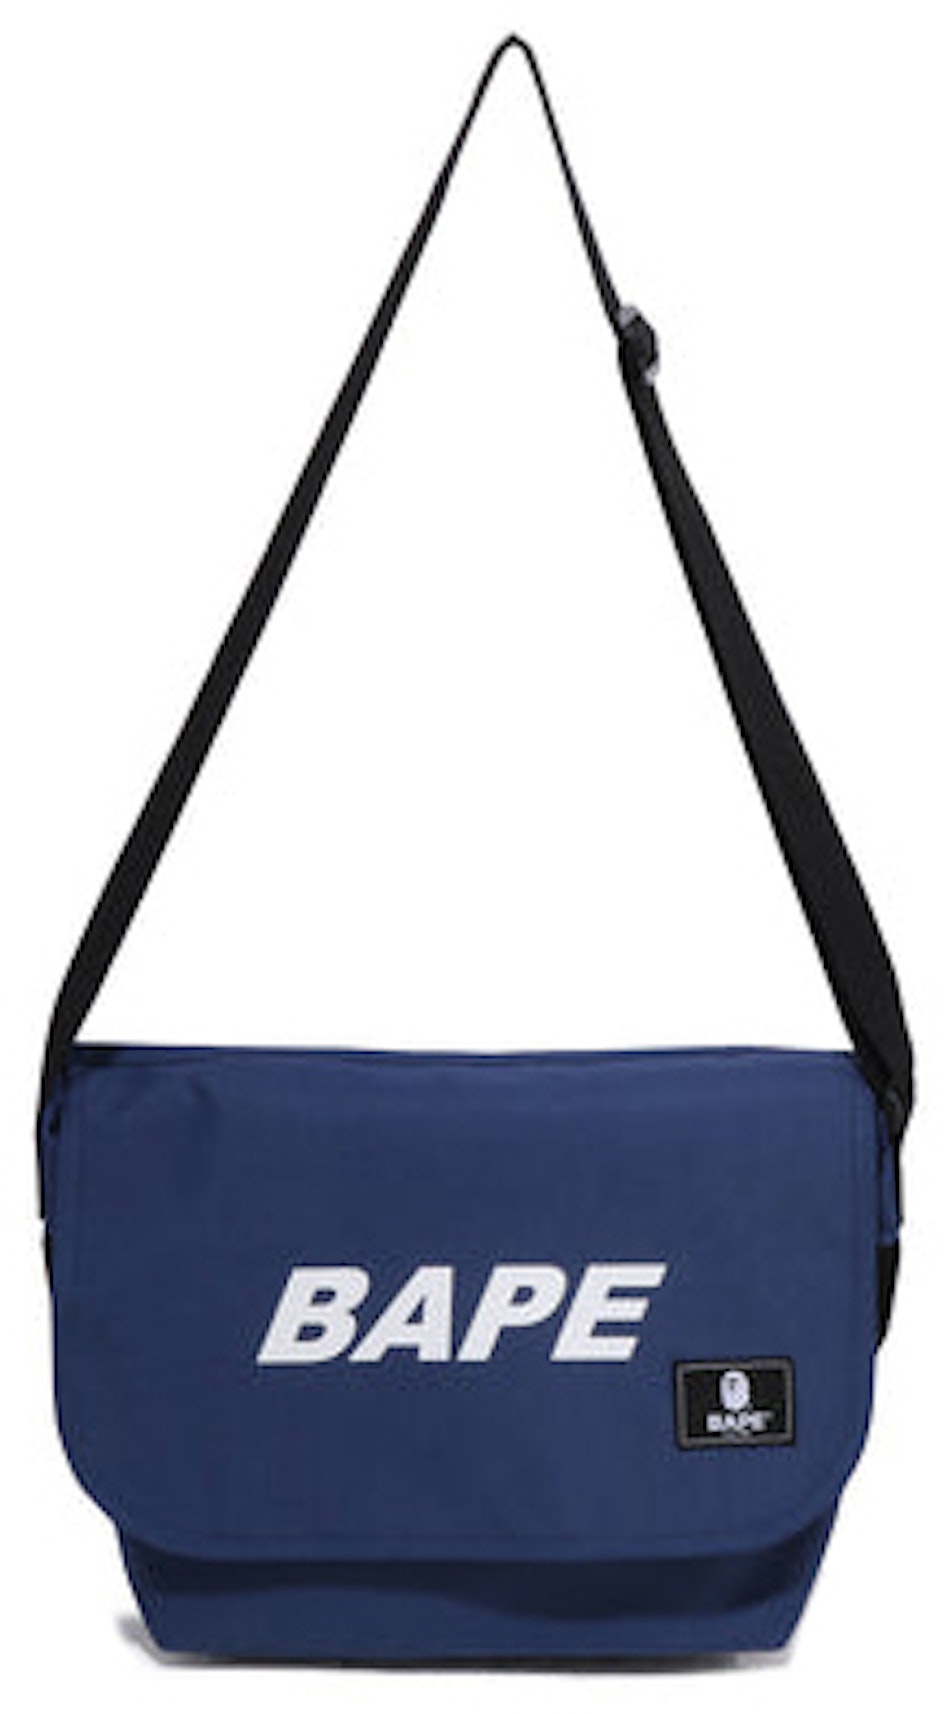 Buy BAPE Accessories - StockX